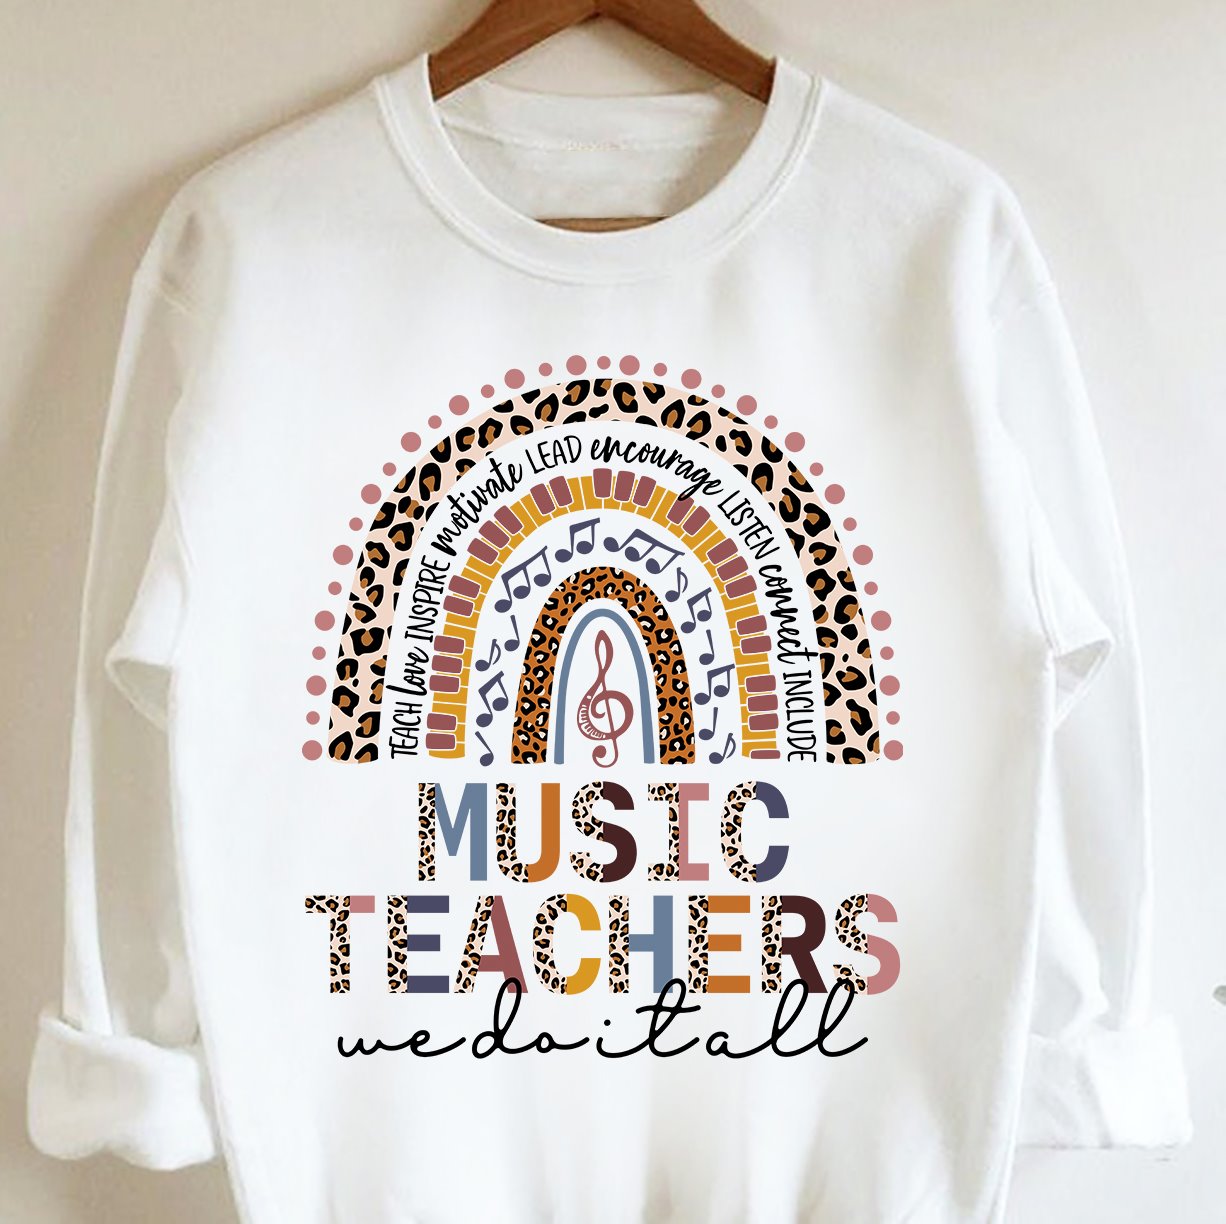 Music teacher we do it all - Teacher love inspire motivate lead encourage listen connect